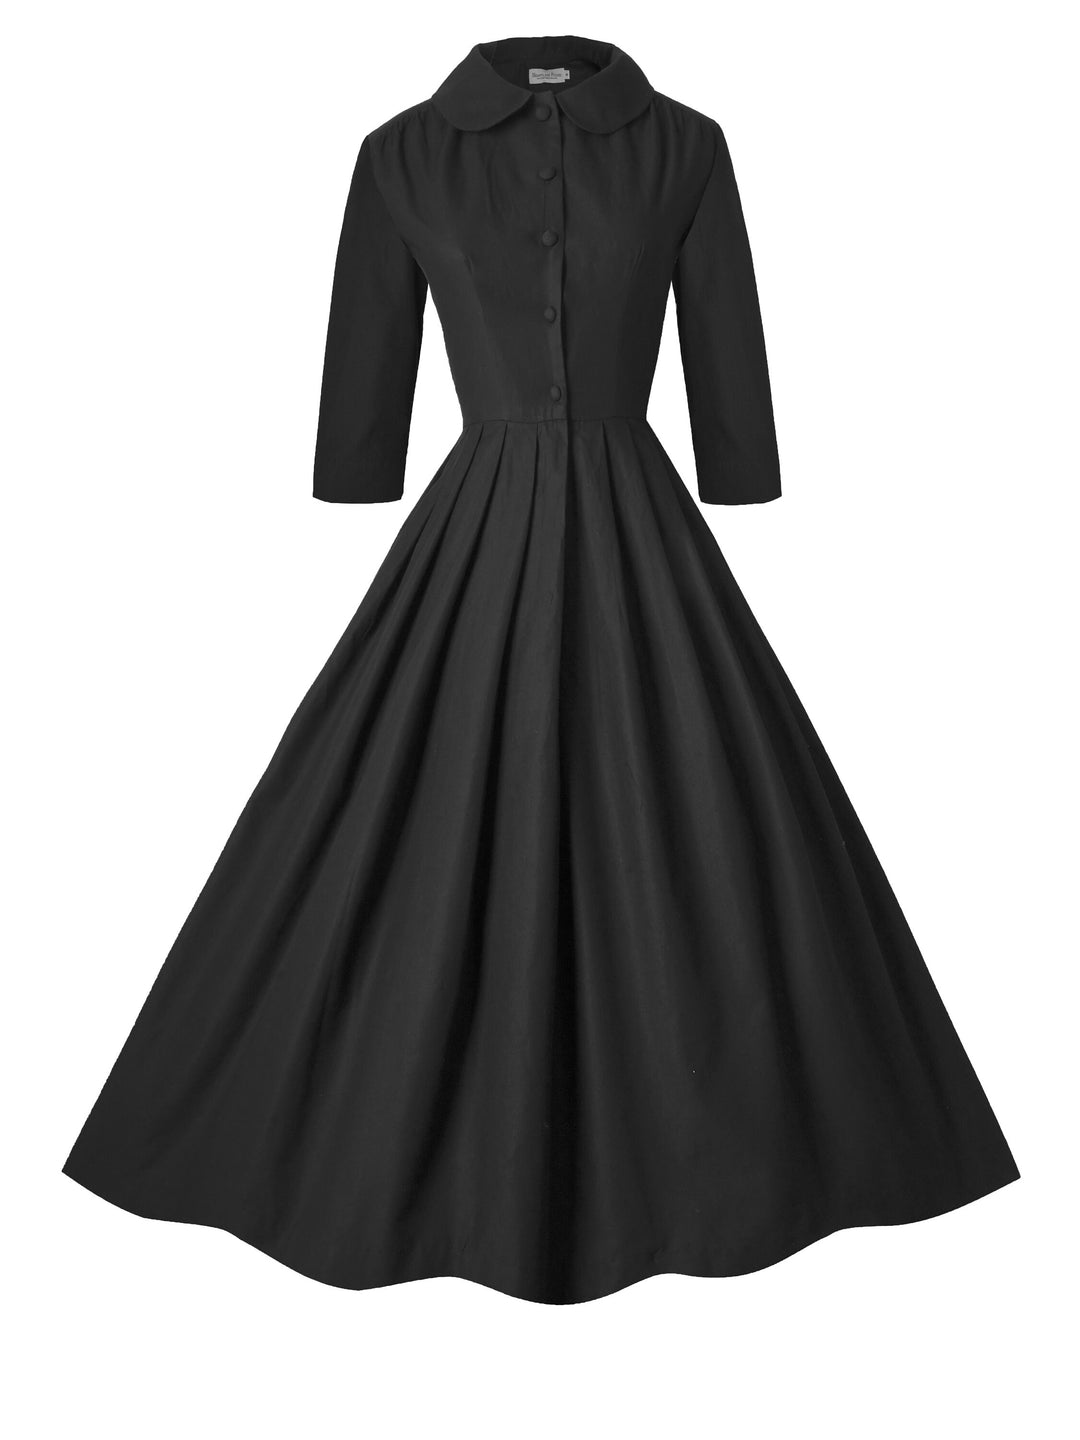 RTS - Size S - Wendy Dress in Raven Black Cotton